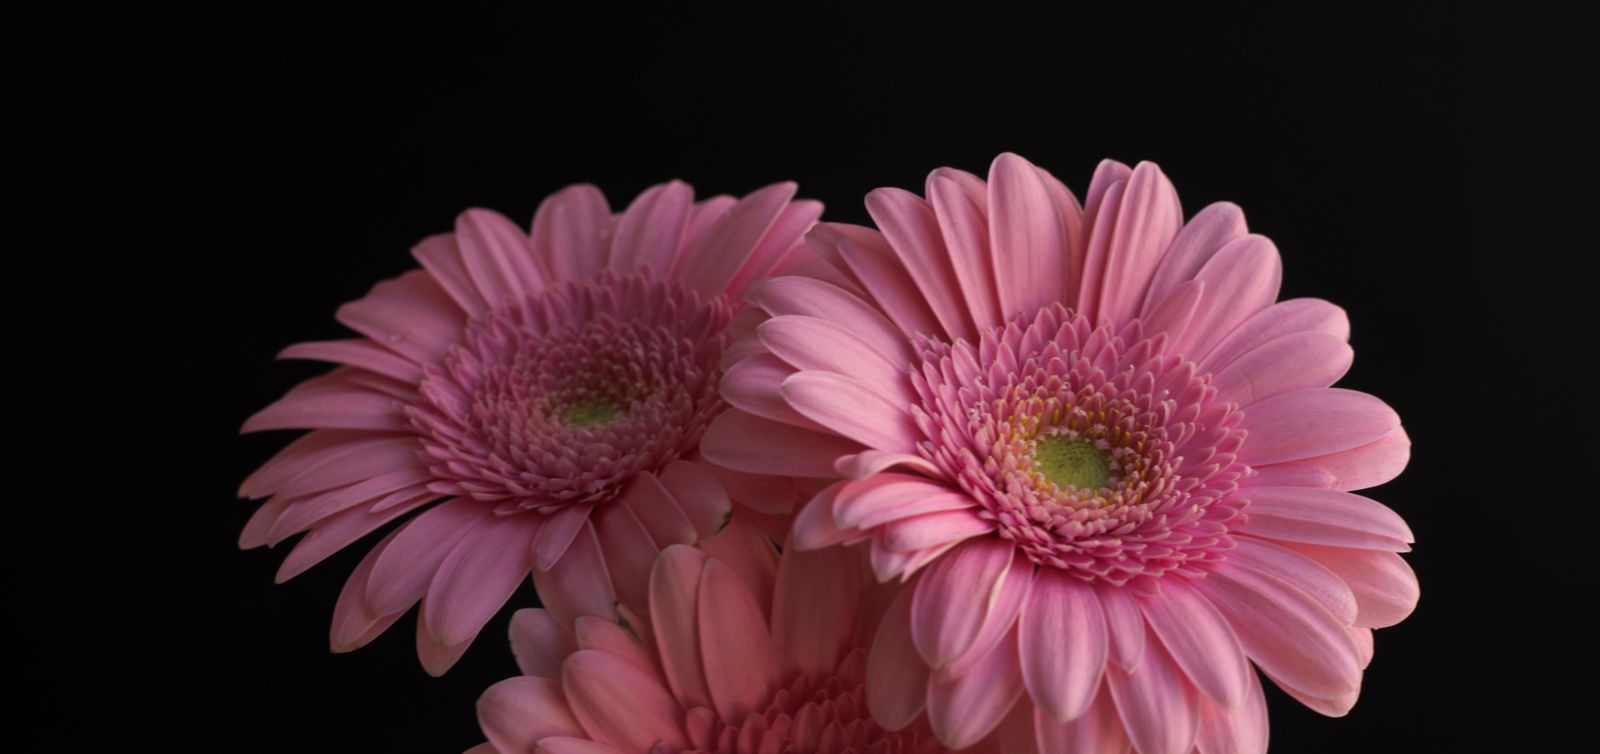 pink-flowers-on-a-black-background-2021-08-31-06-07-37-utc.jpg